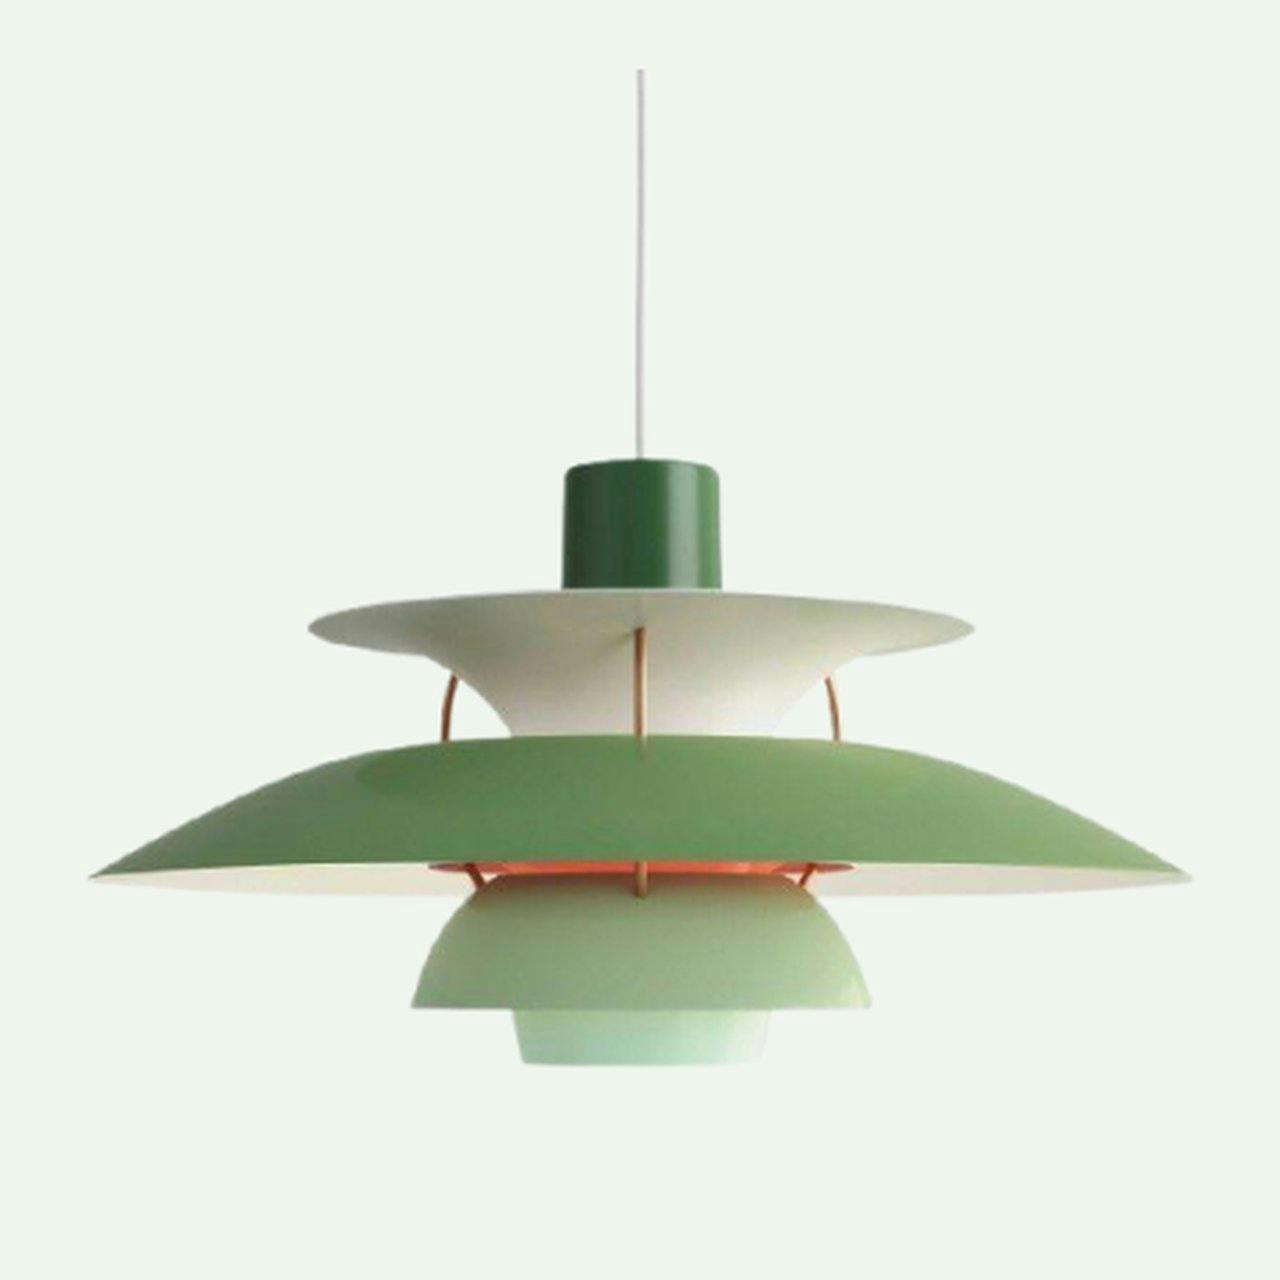 60's design Hanglampen